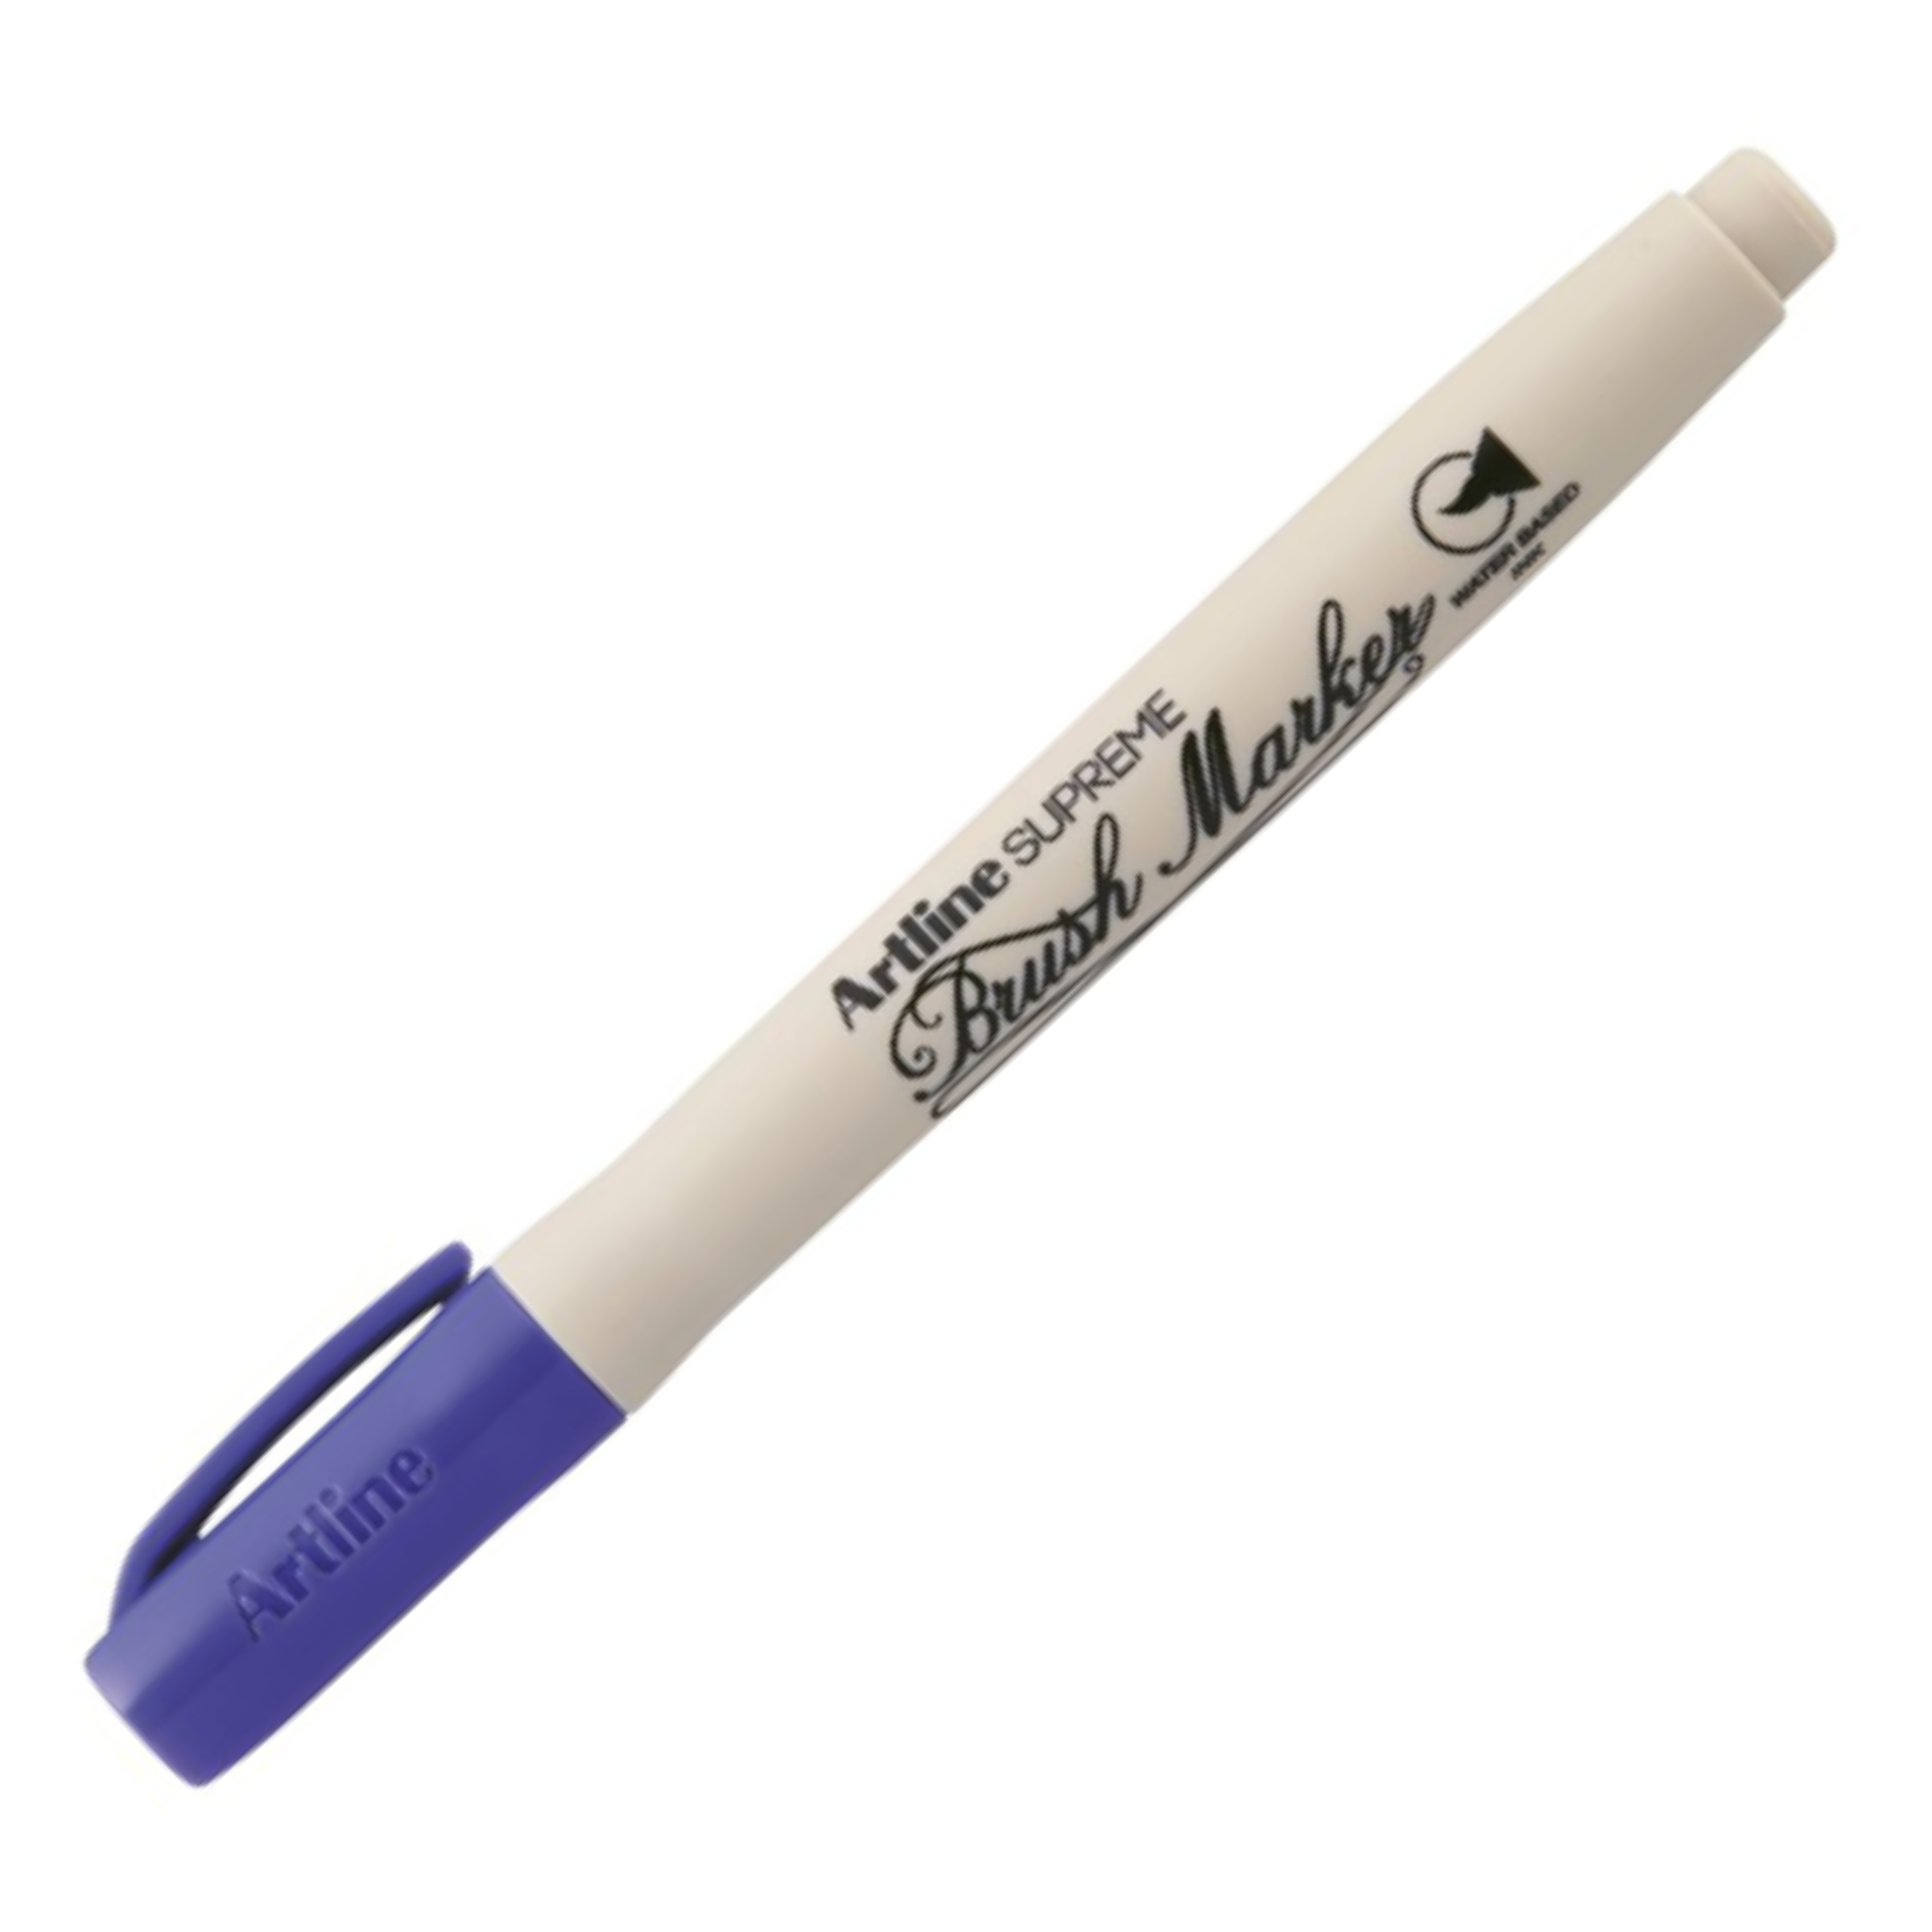 Artline Supreme Brush Marker Pen Purple Colour Marker Pack of 1